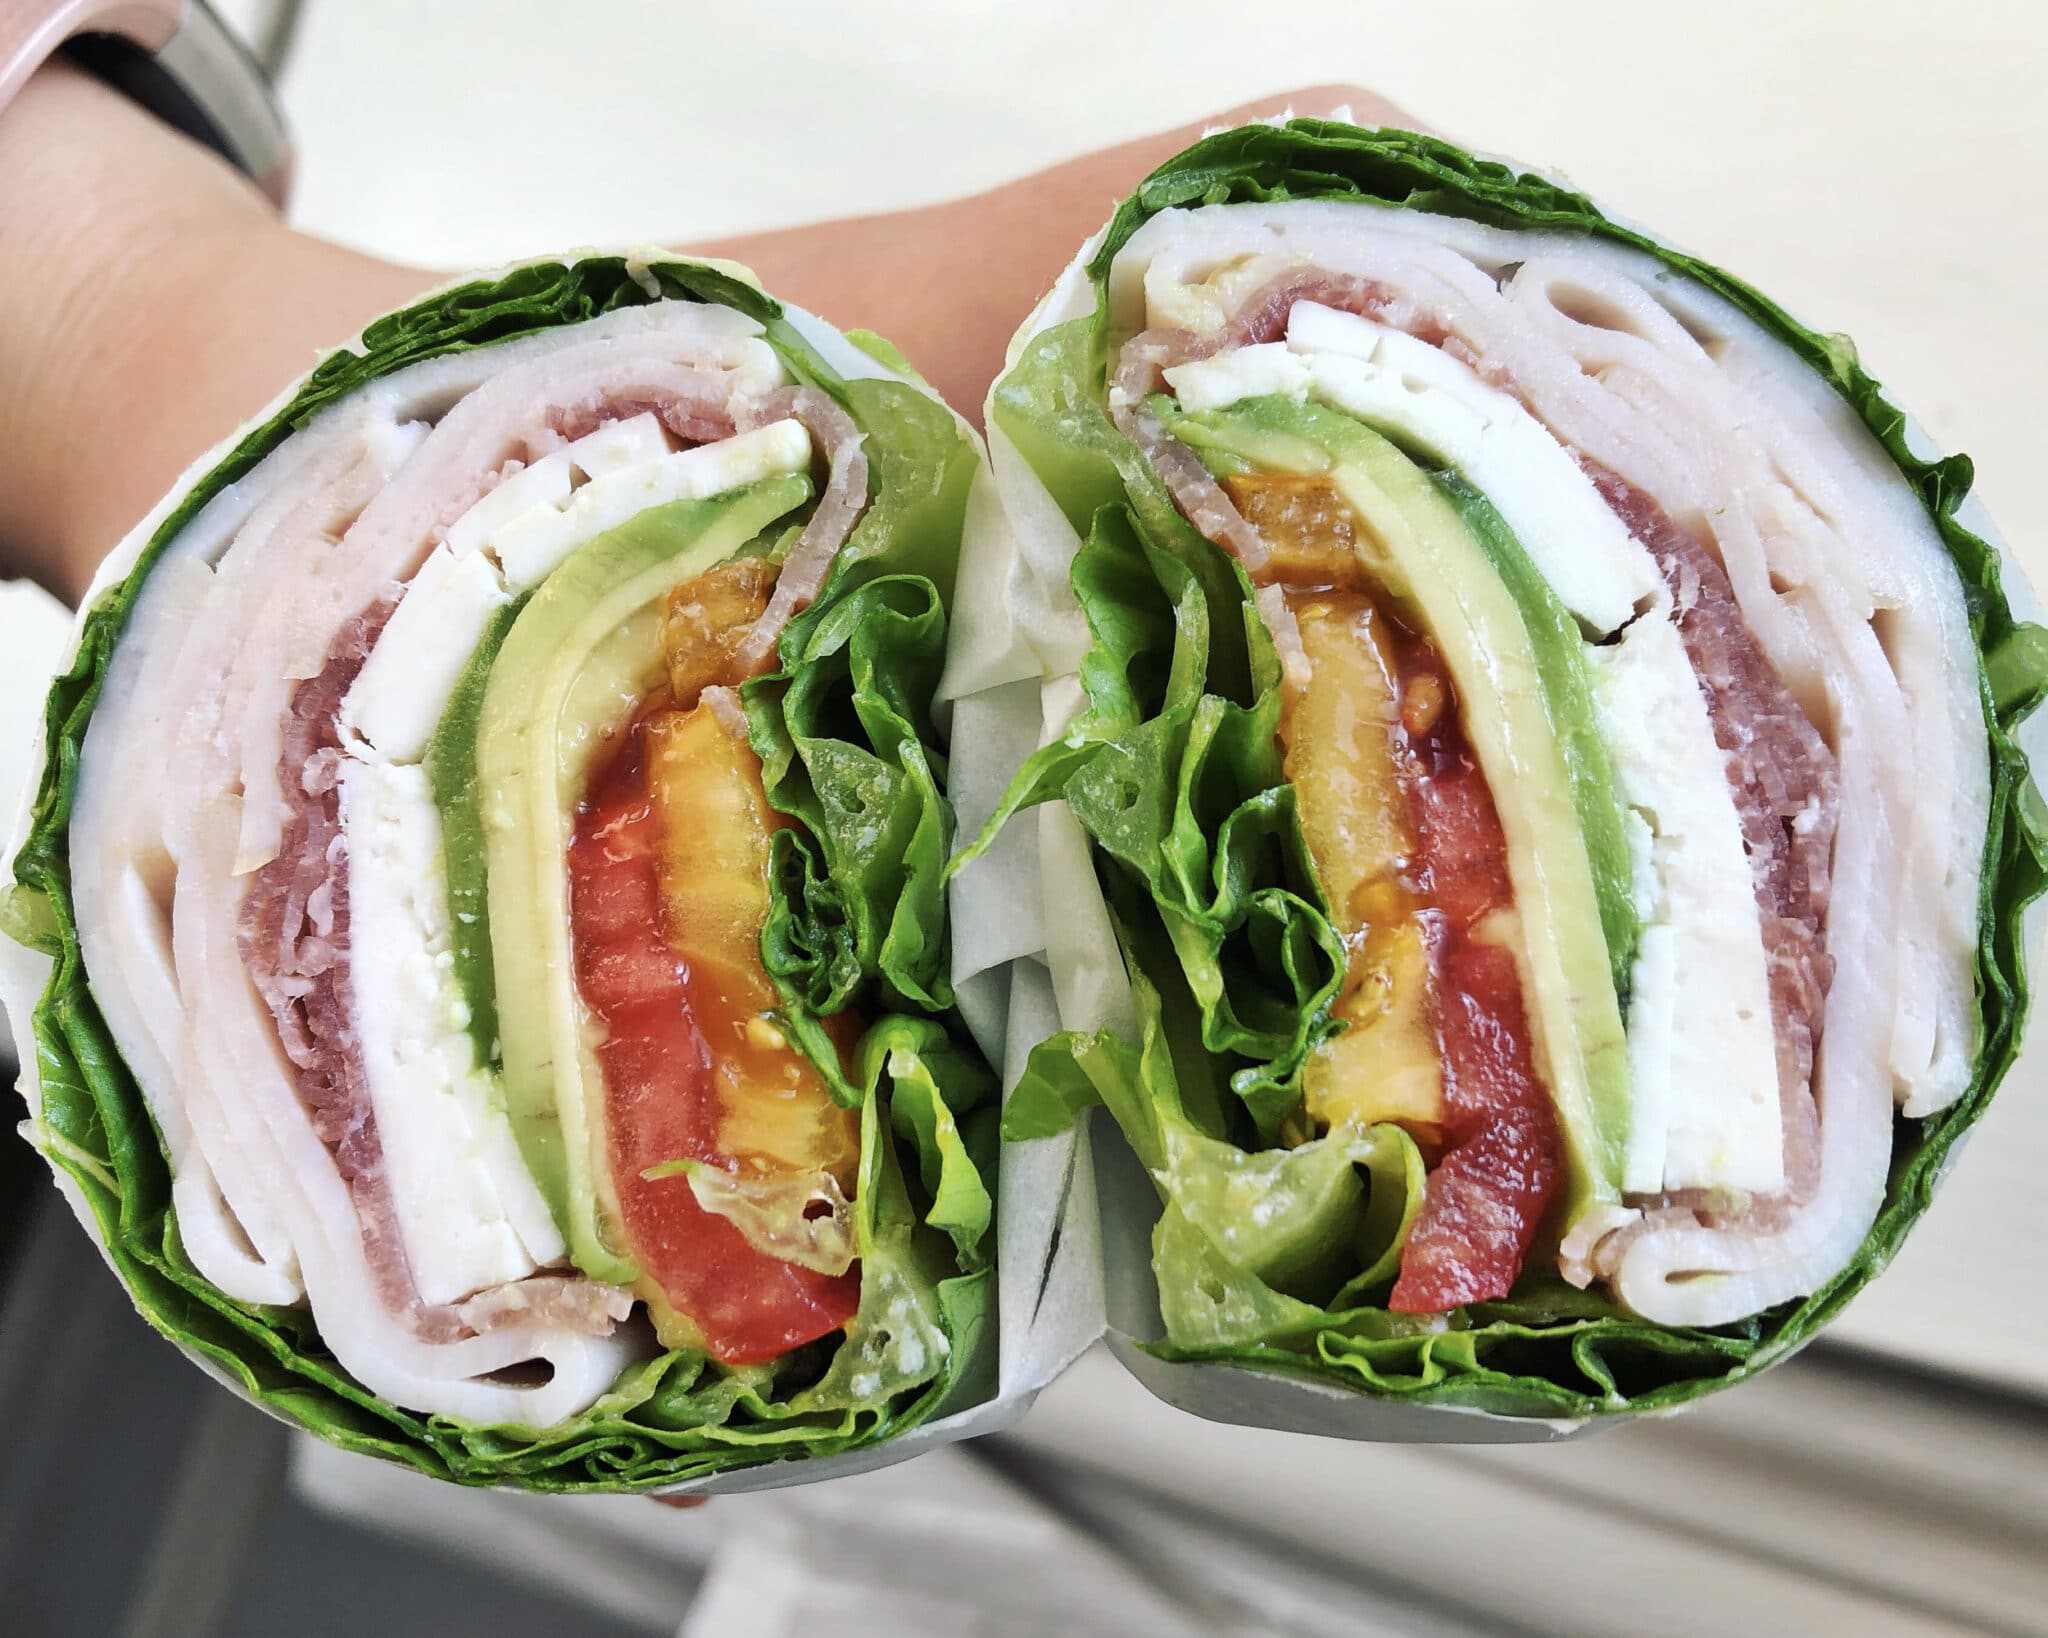 Side view of a low carb lettuce wrap sandwich